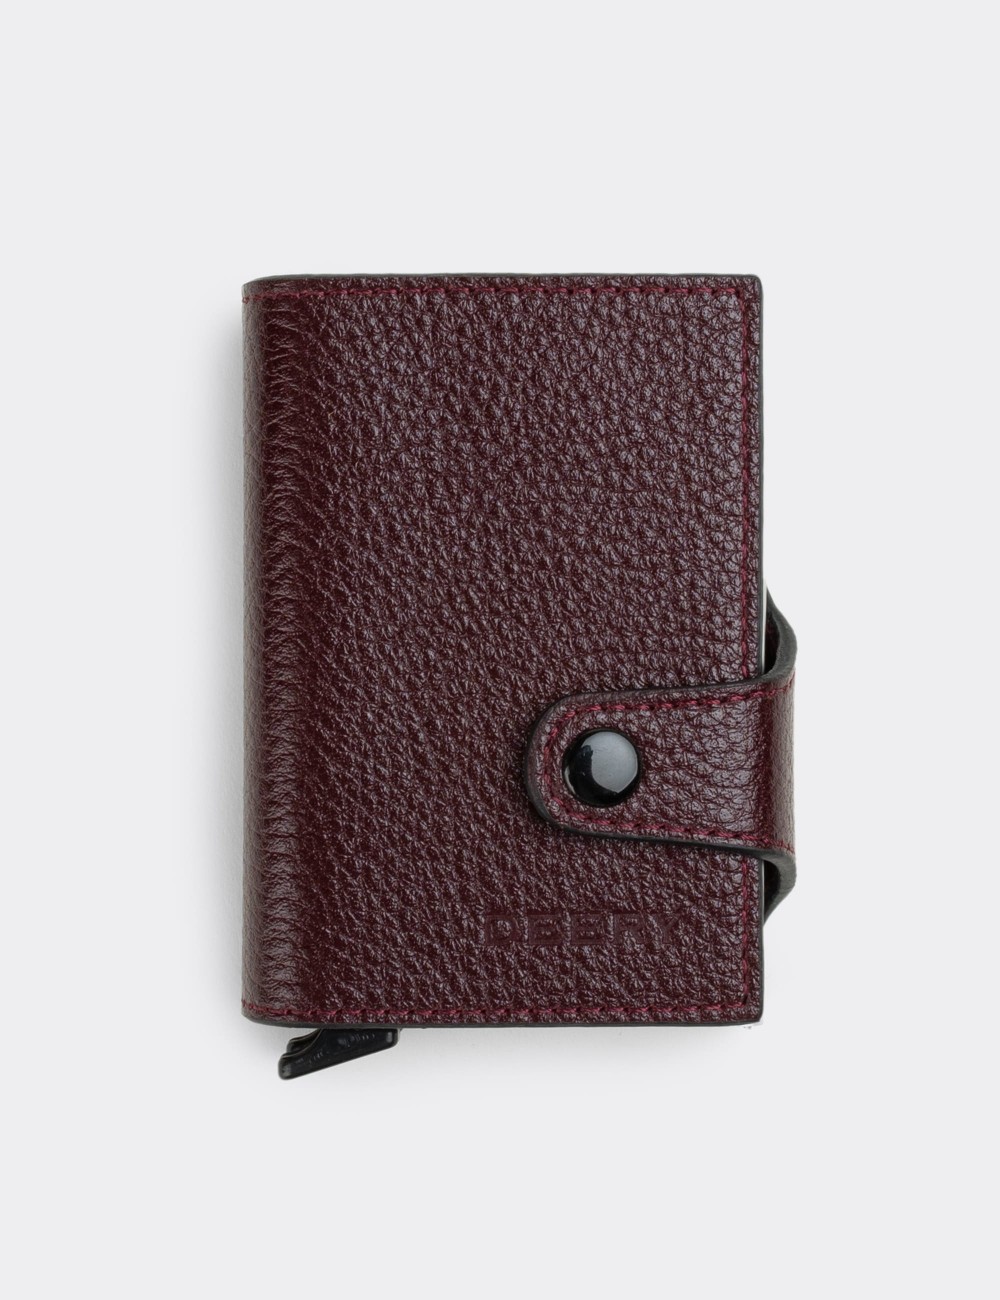  Leather Burgundy Men's Wallet - 00660MBRDZ01